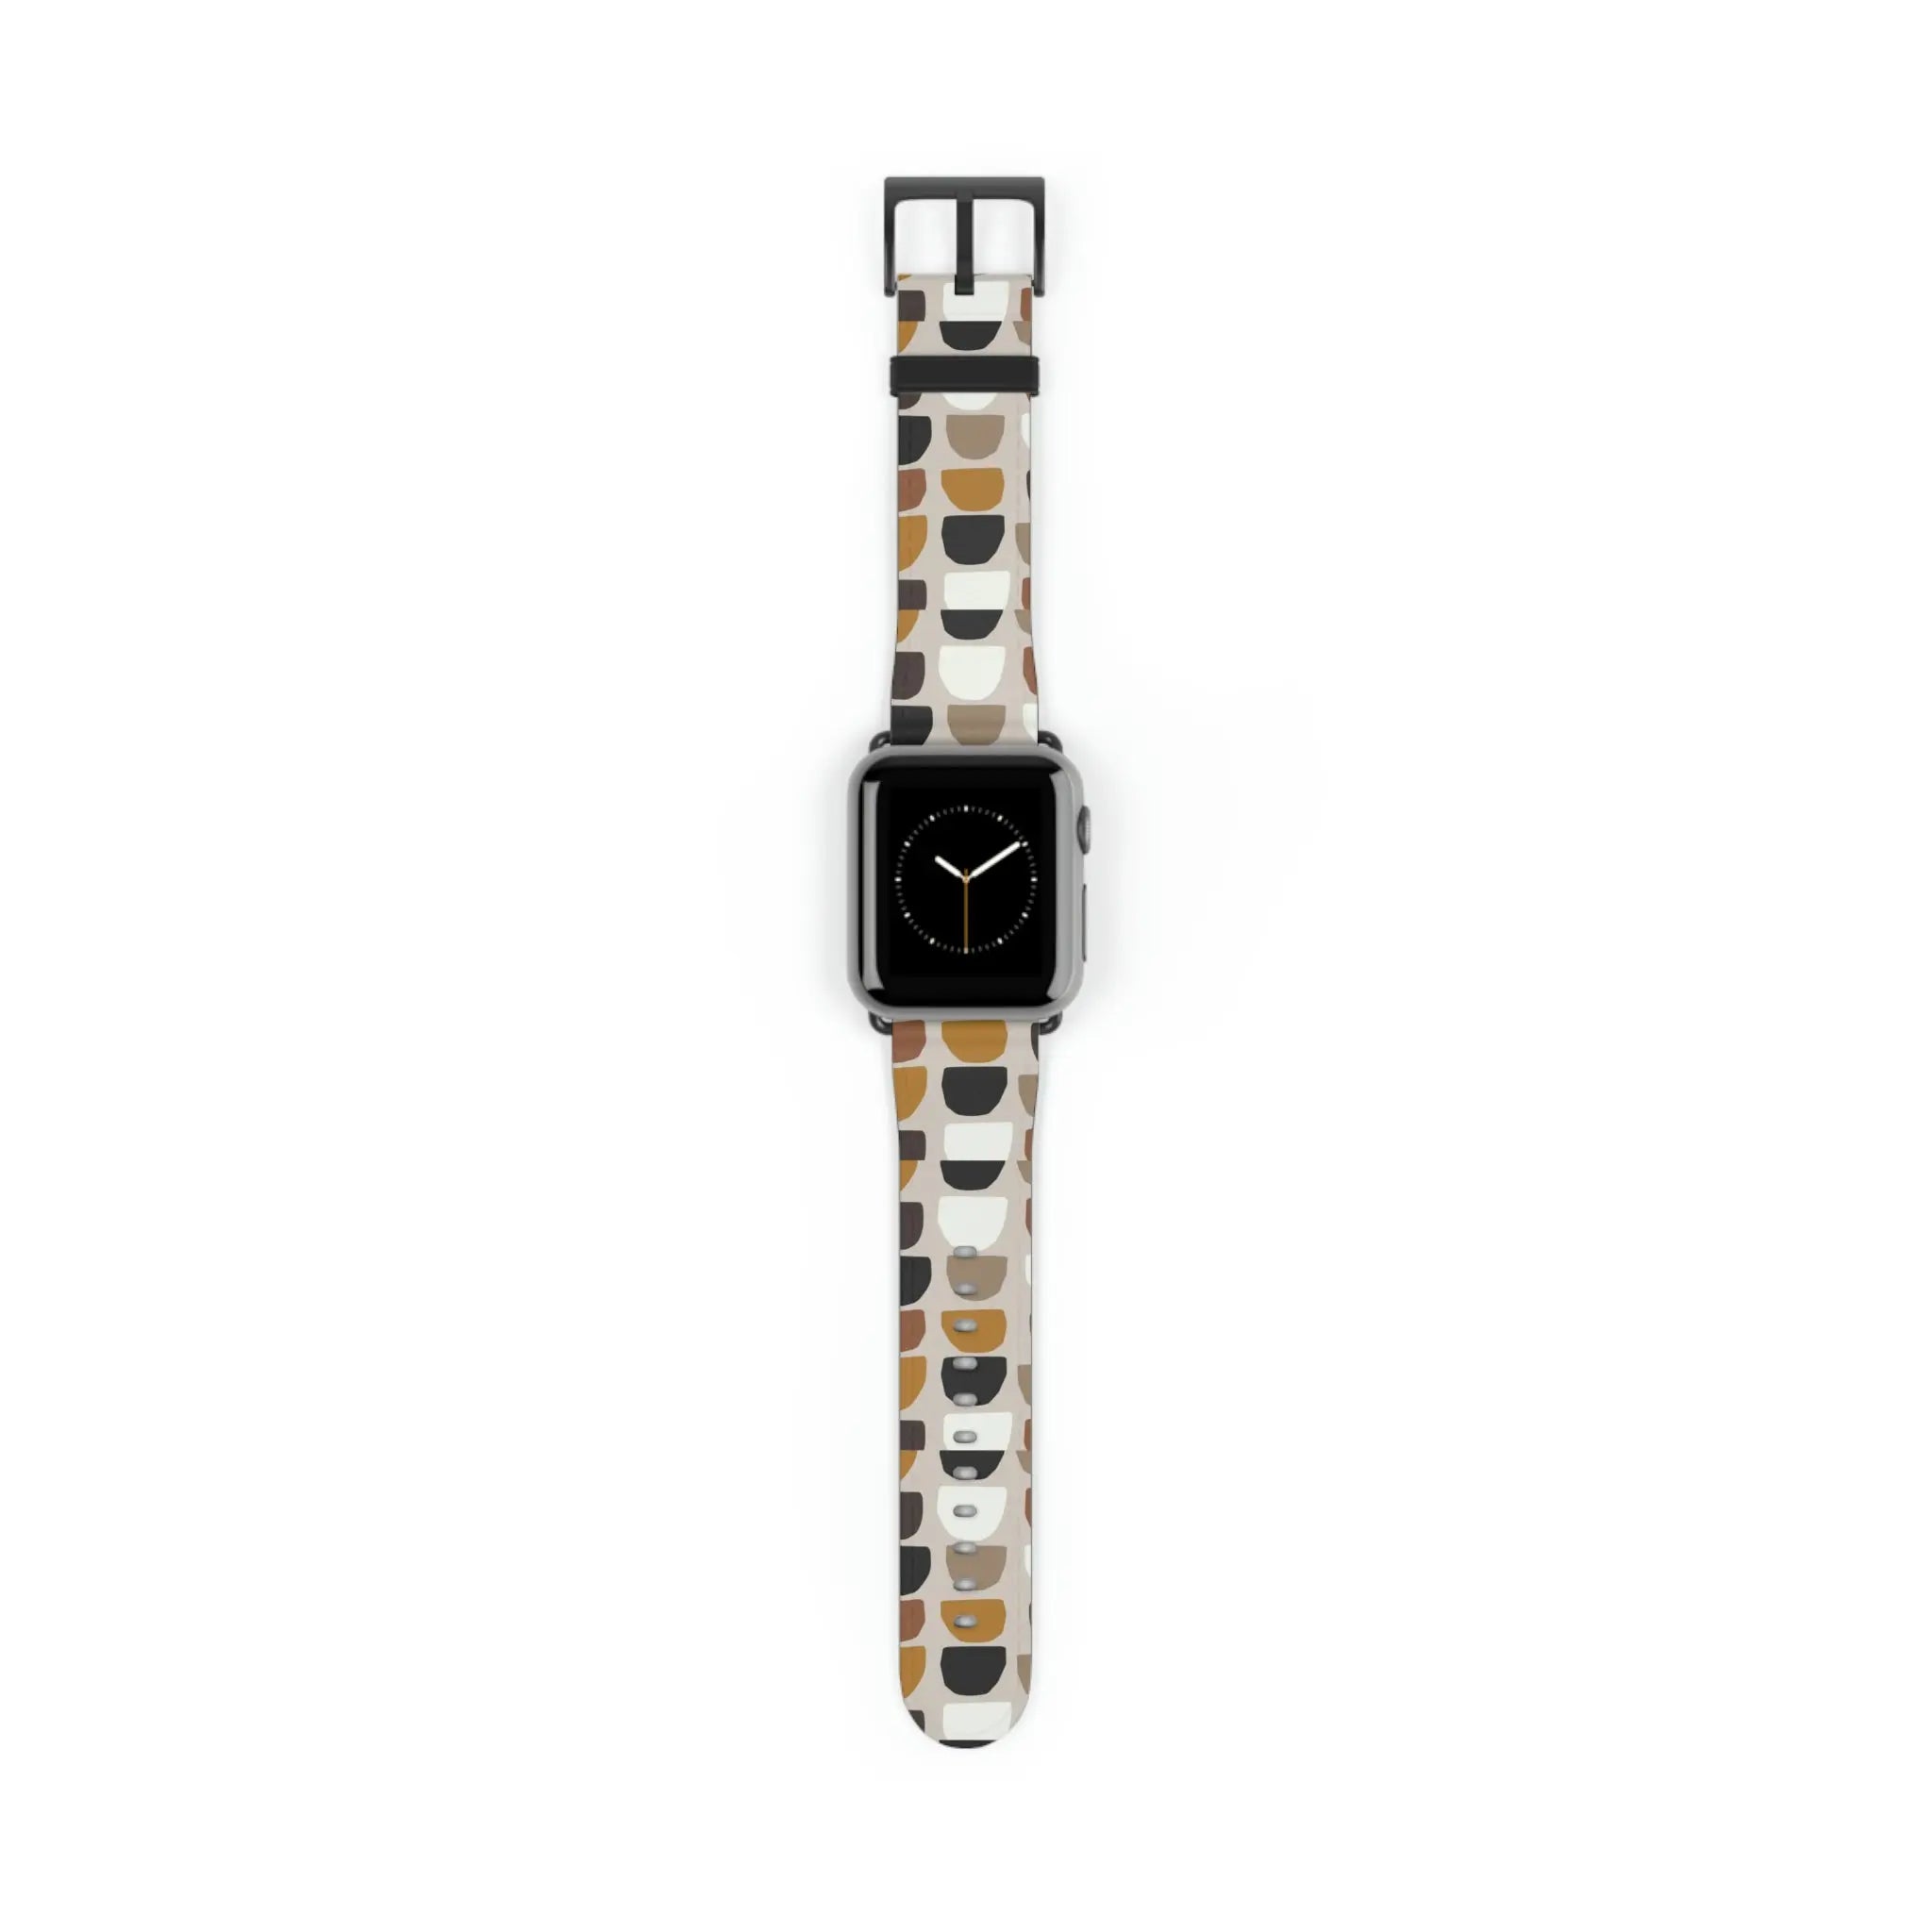  Boho (Khaki) Apple Watch Band Watch Band38-41mmBlackMatte